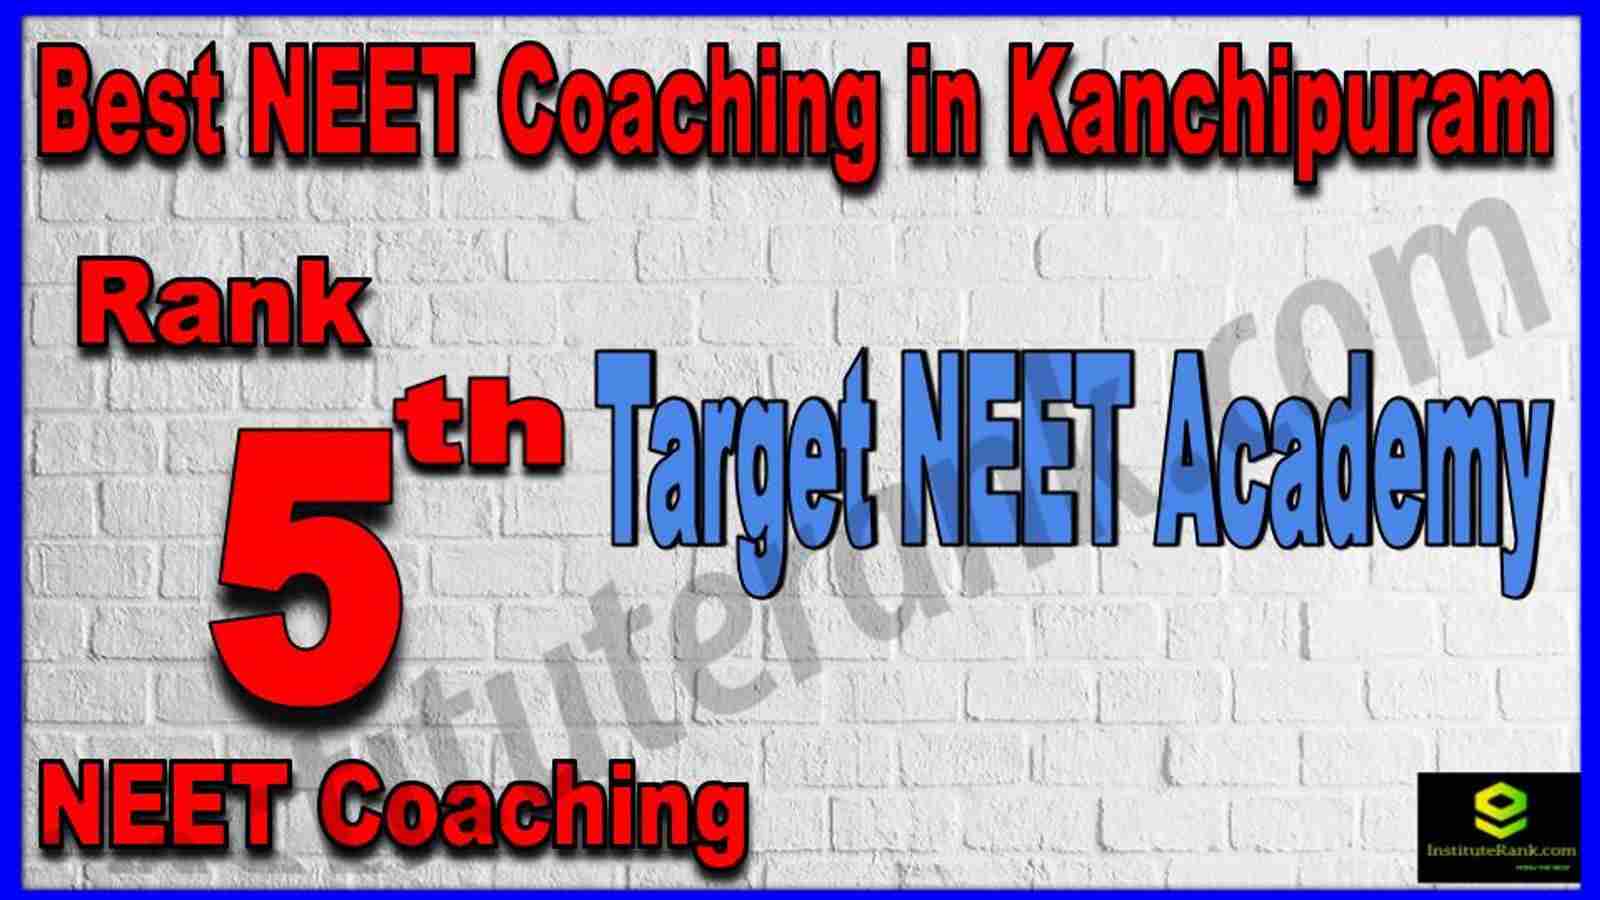 Rank 5th Best NEET Coaching in Kanchipuram